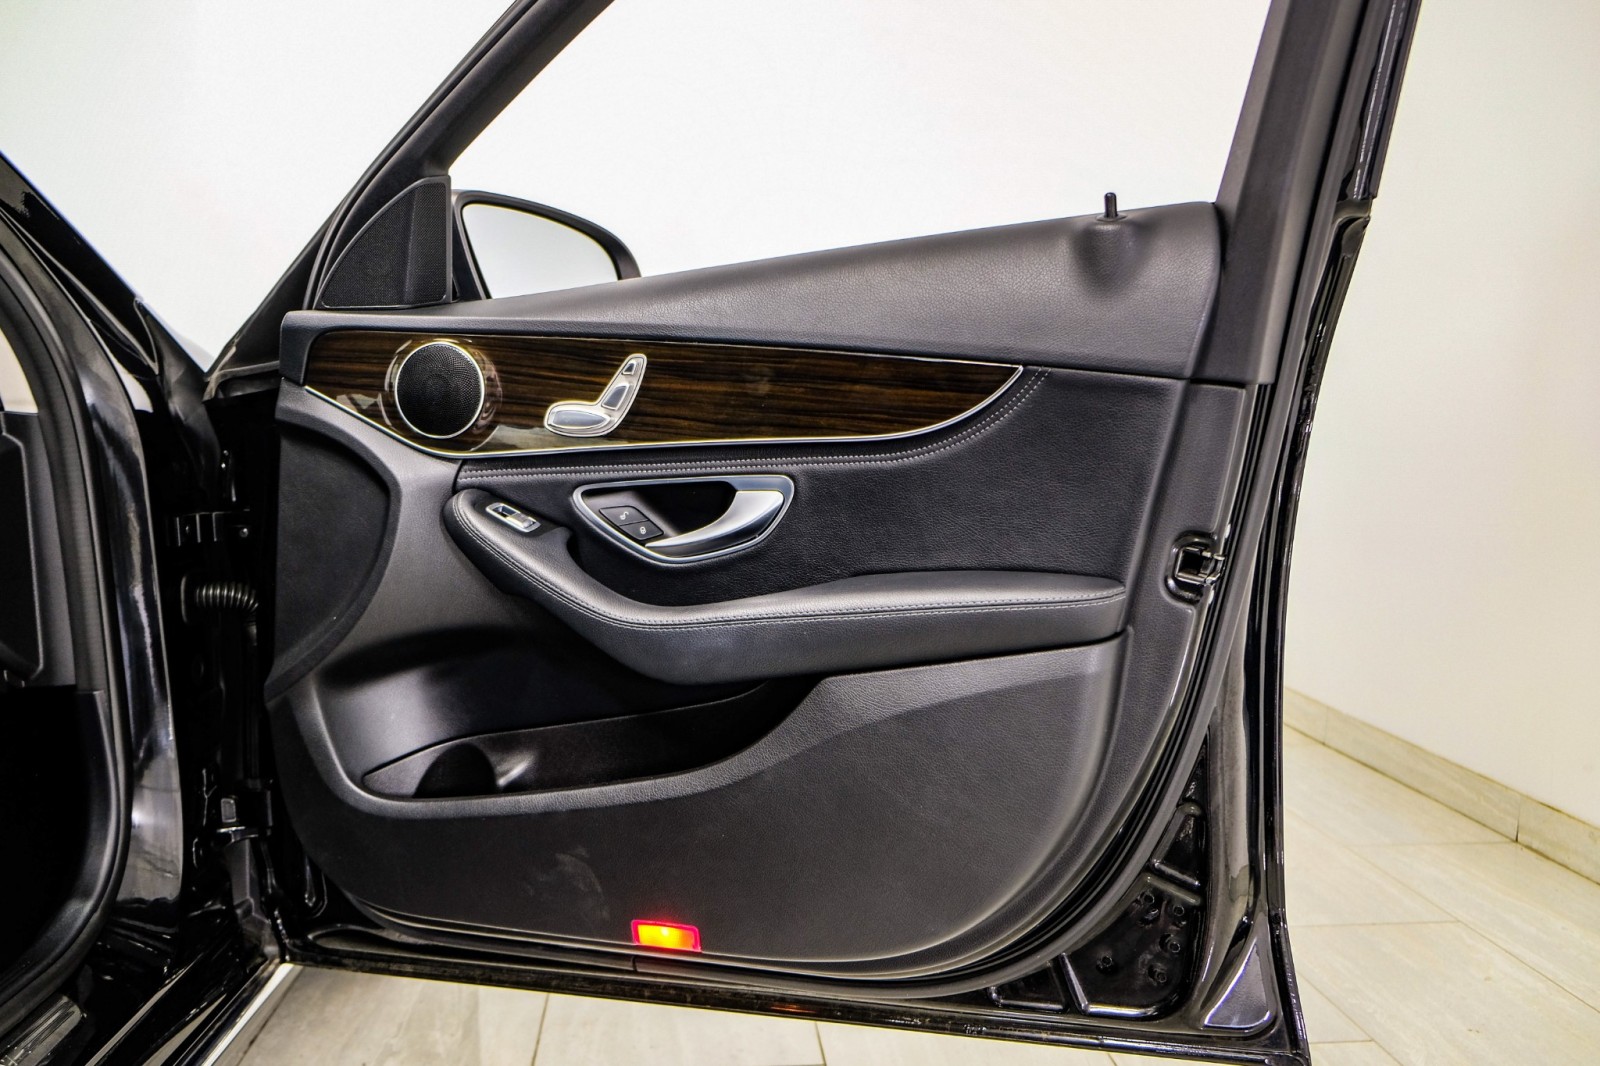 2015 Mercedes-Benz C300 SPORT BLIND SPOT ASSIST NAVIGATION LEATHER SEATS R 43